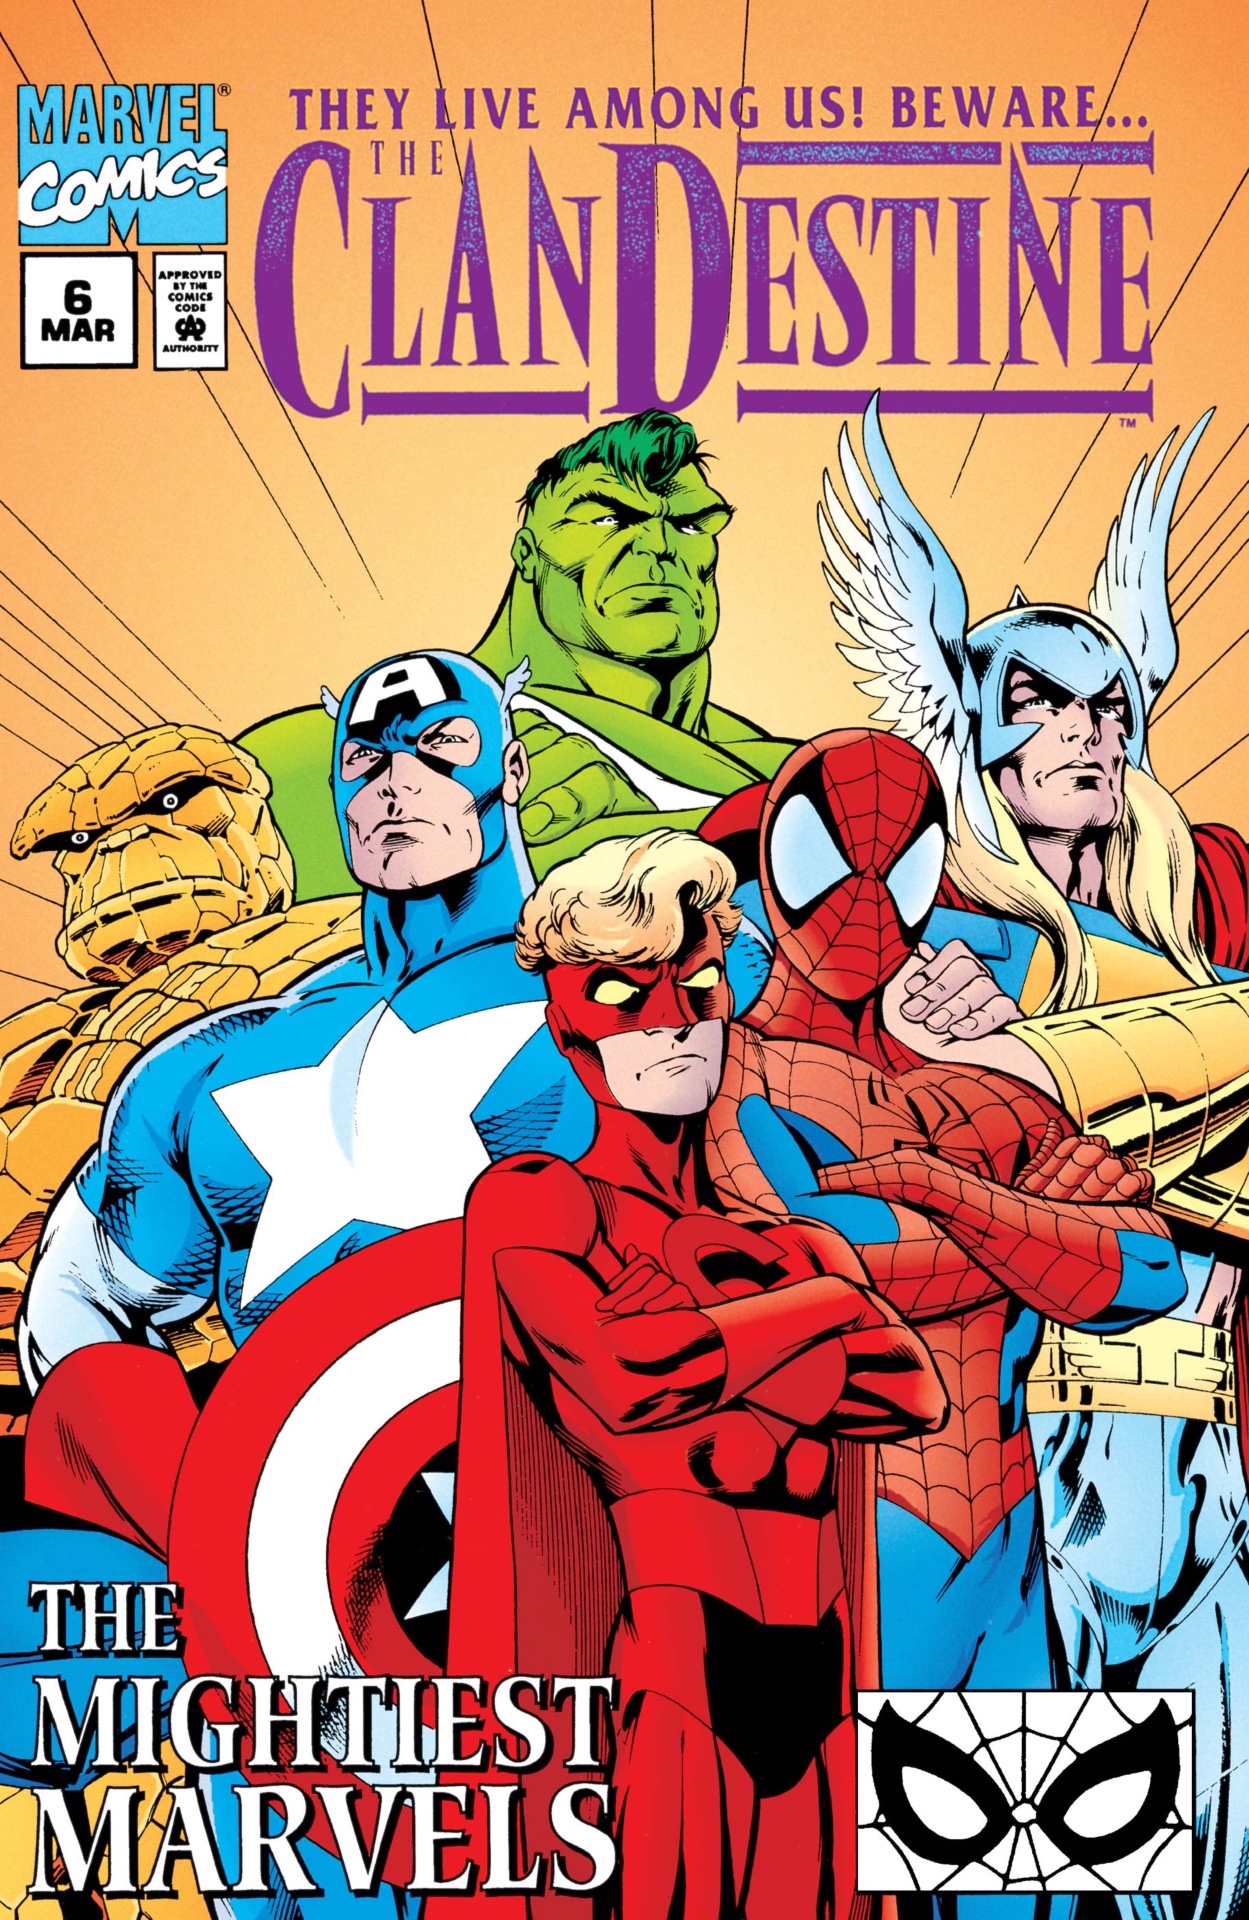 The ClanDestine in Marvel Comics